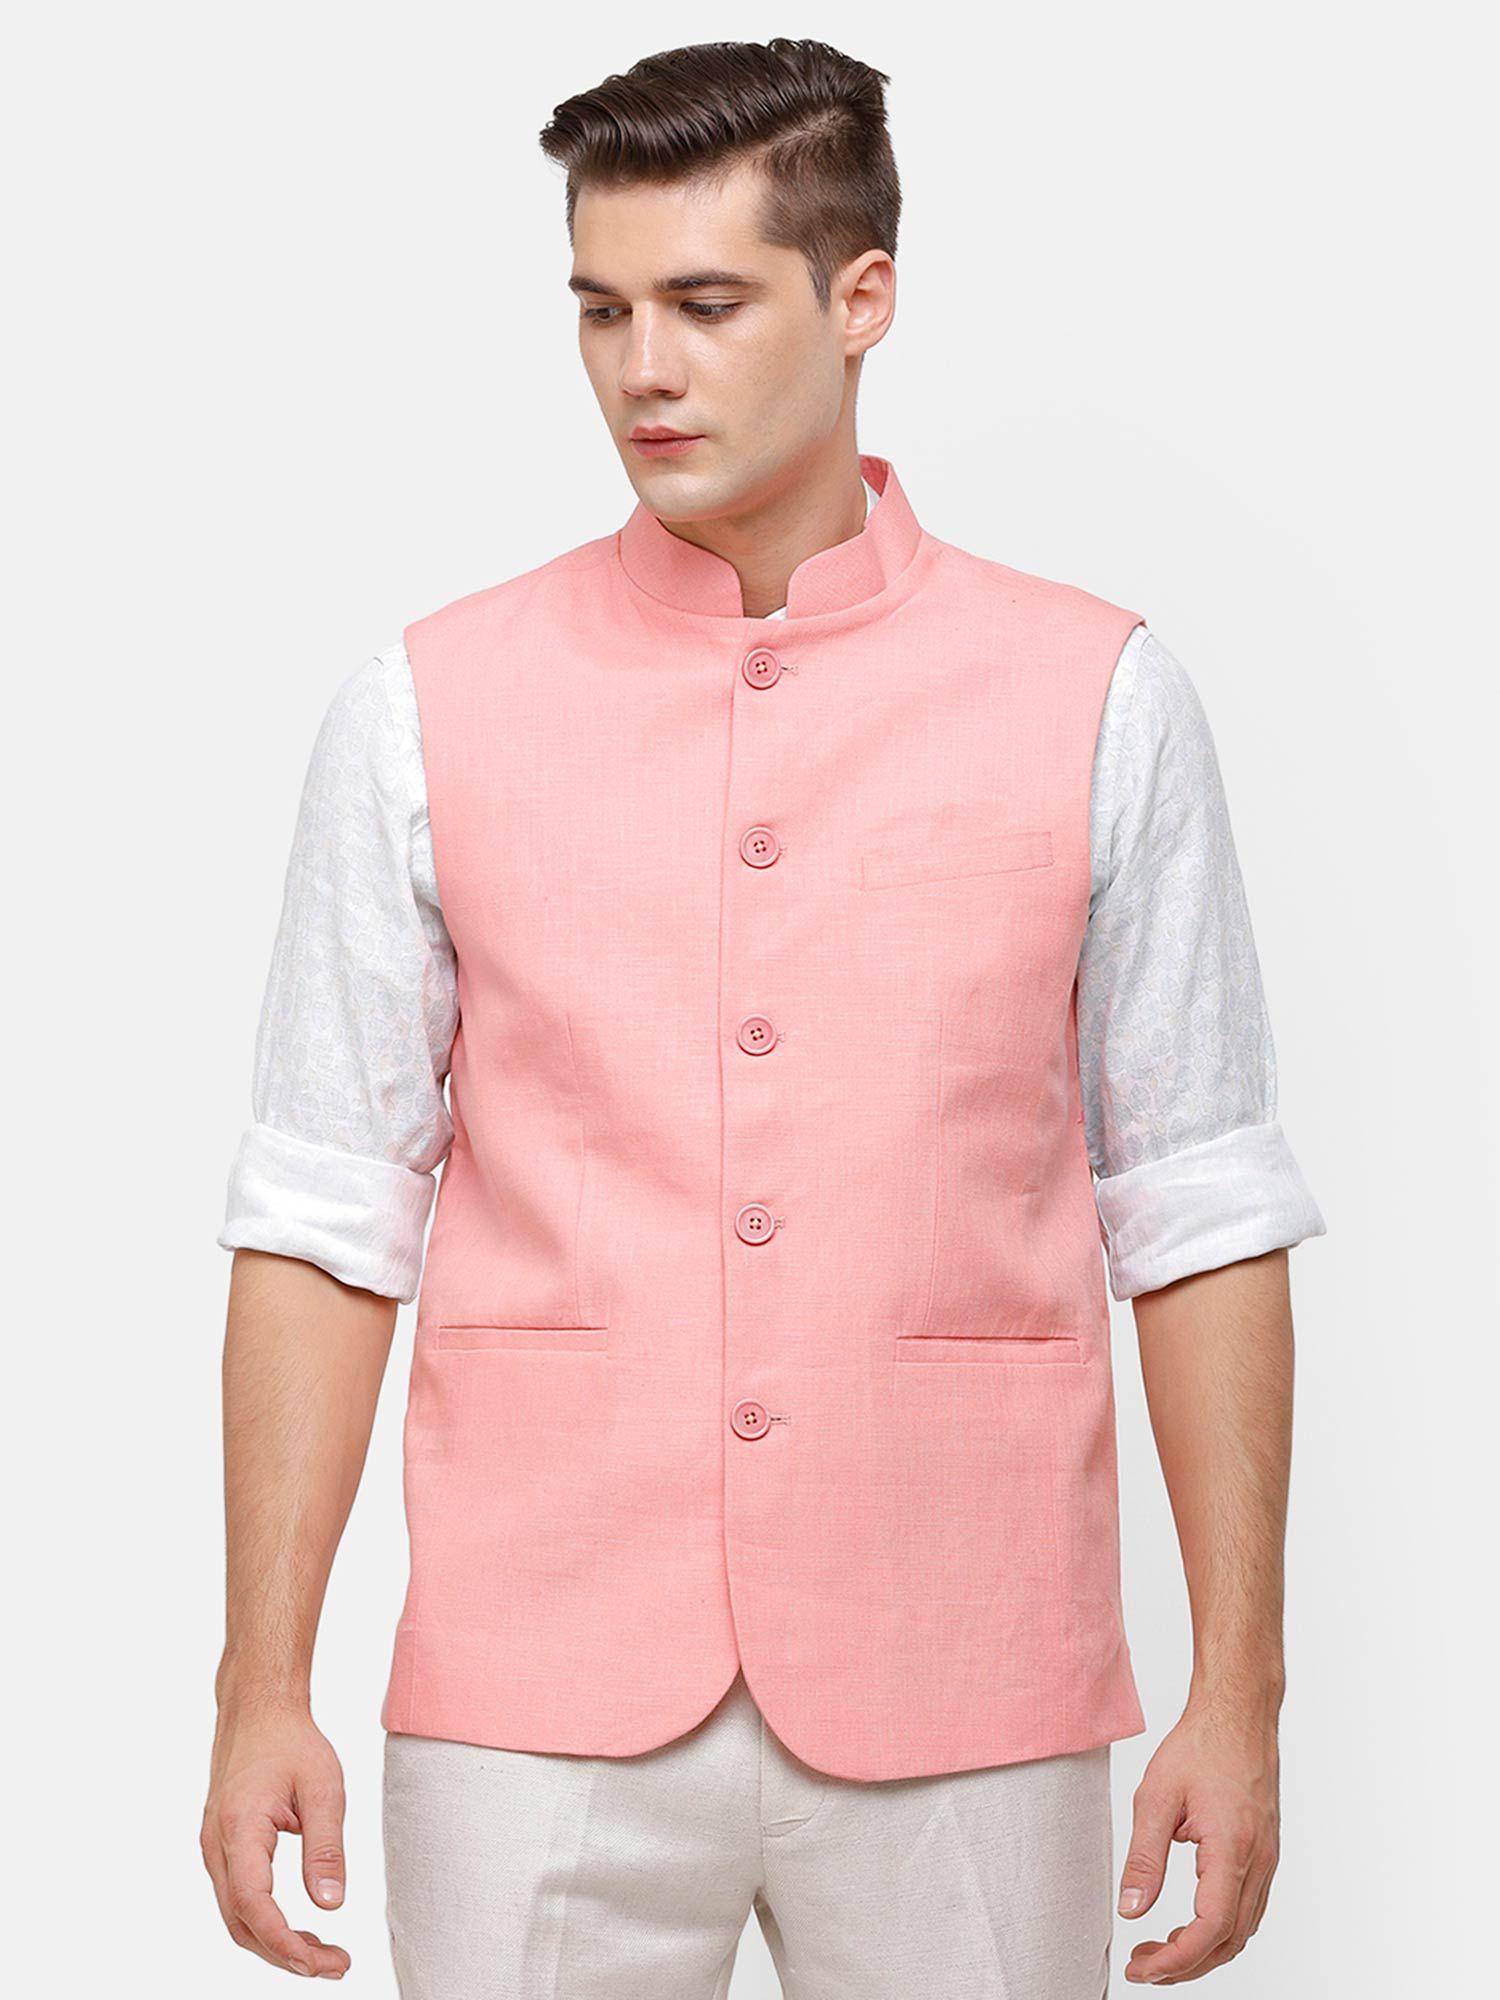 men's-pure-linen-pink-solid-nehru-jacket